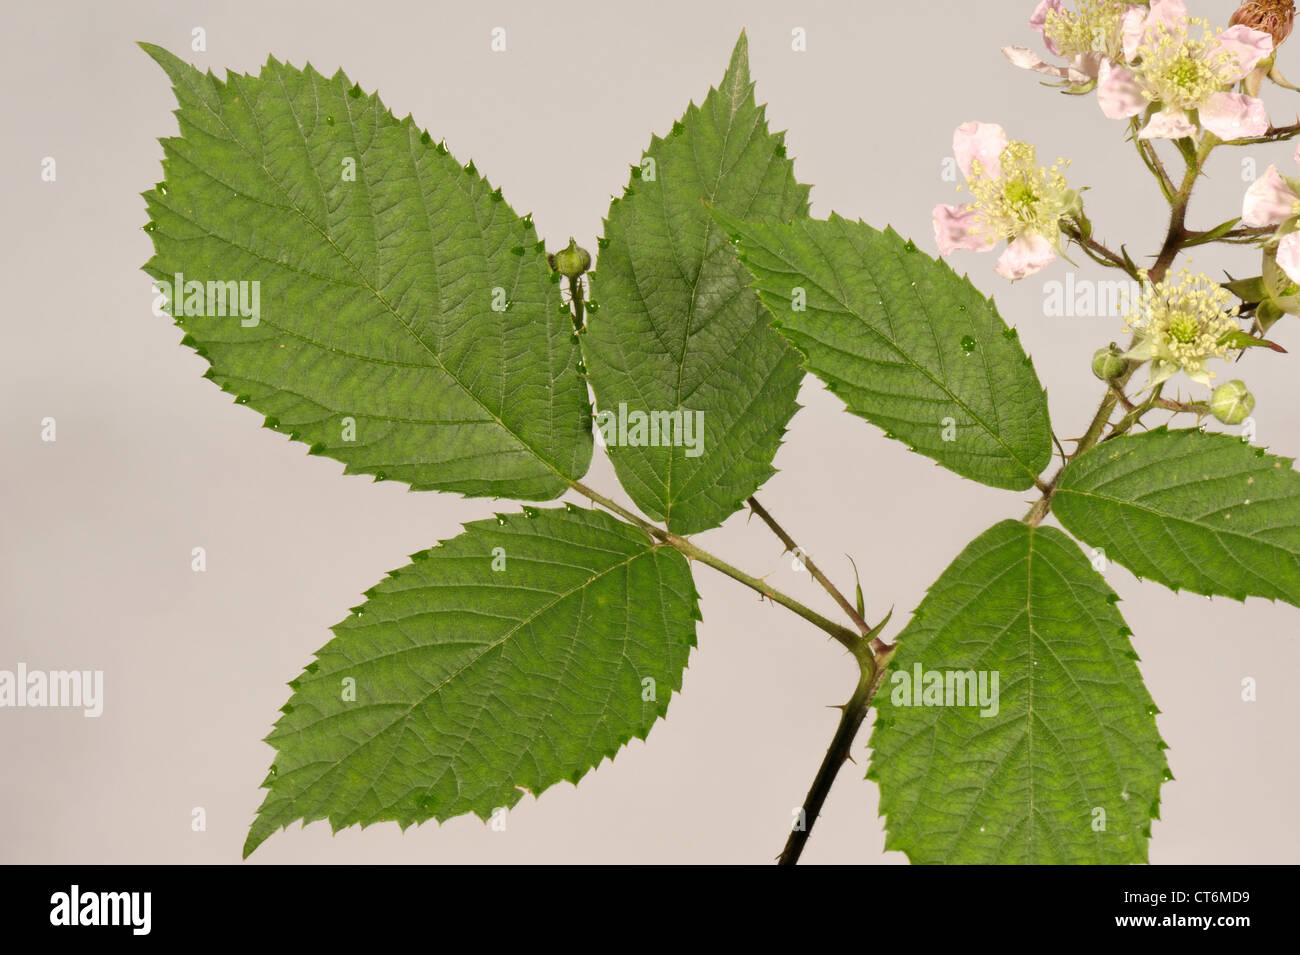 Blackberry or bramble Rubus fruticosus leaves and flowers Stock Photo